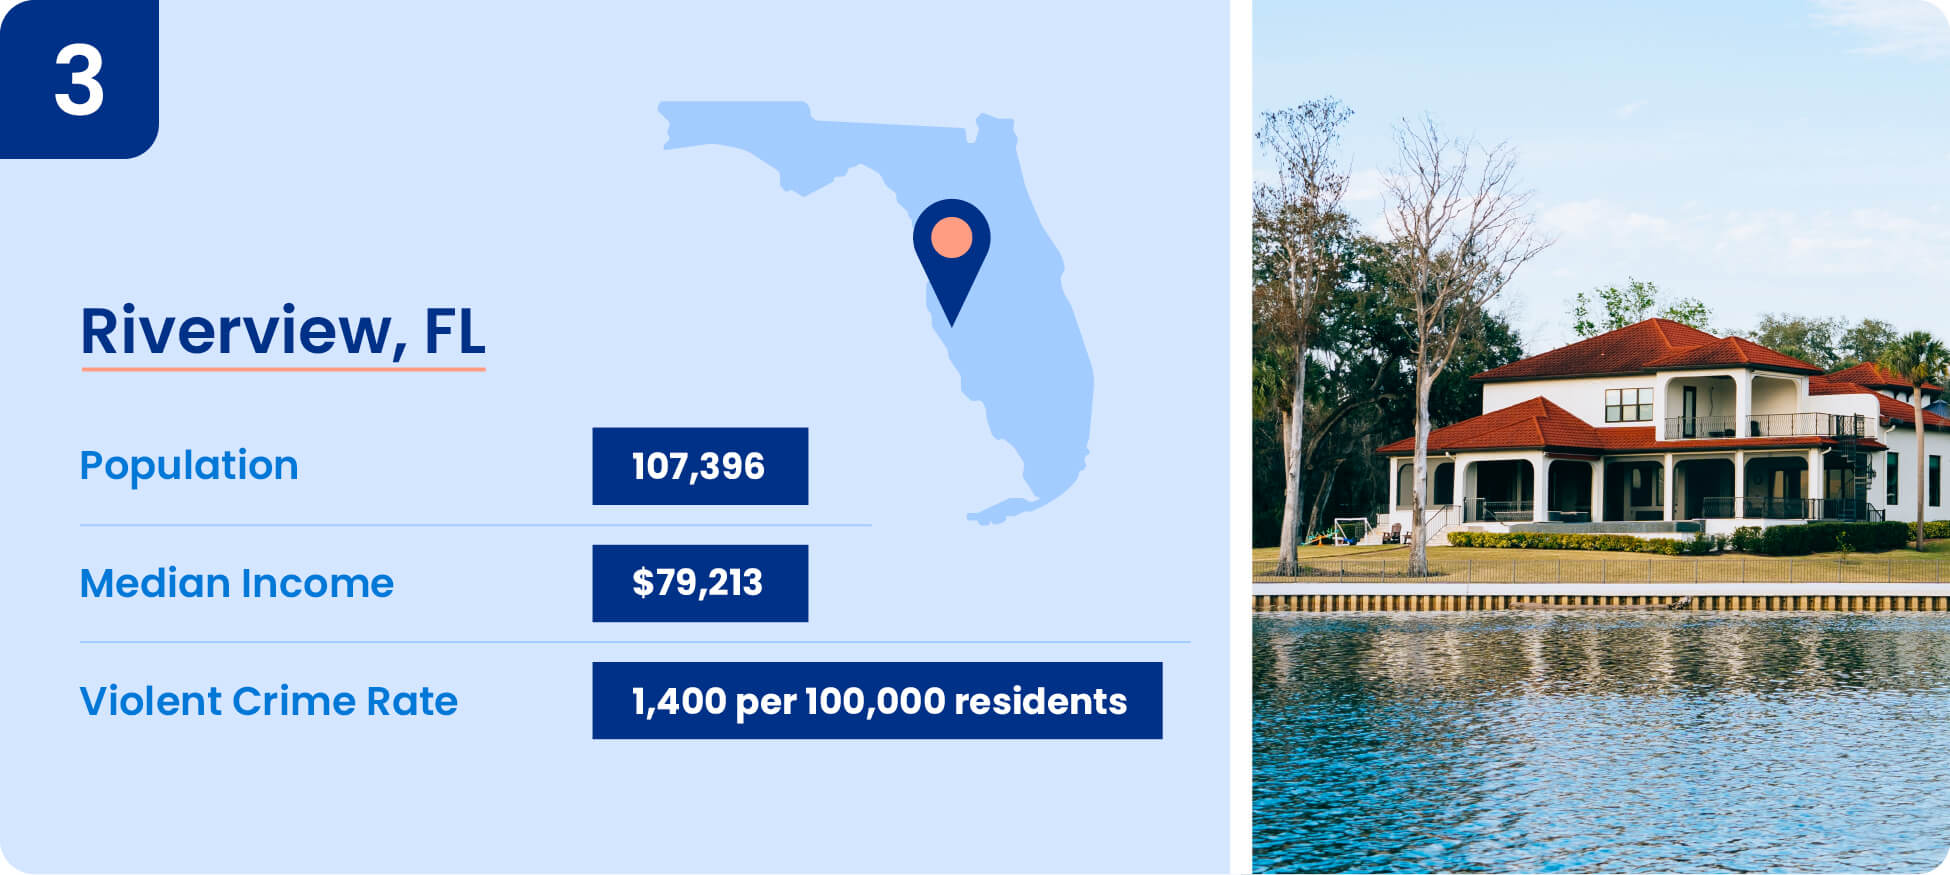 Image shows safety data including median income, population, and violent crime rate for Riverview, Florida.